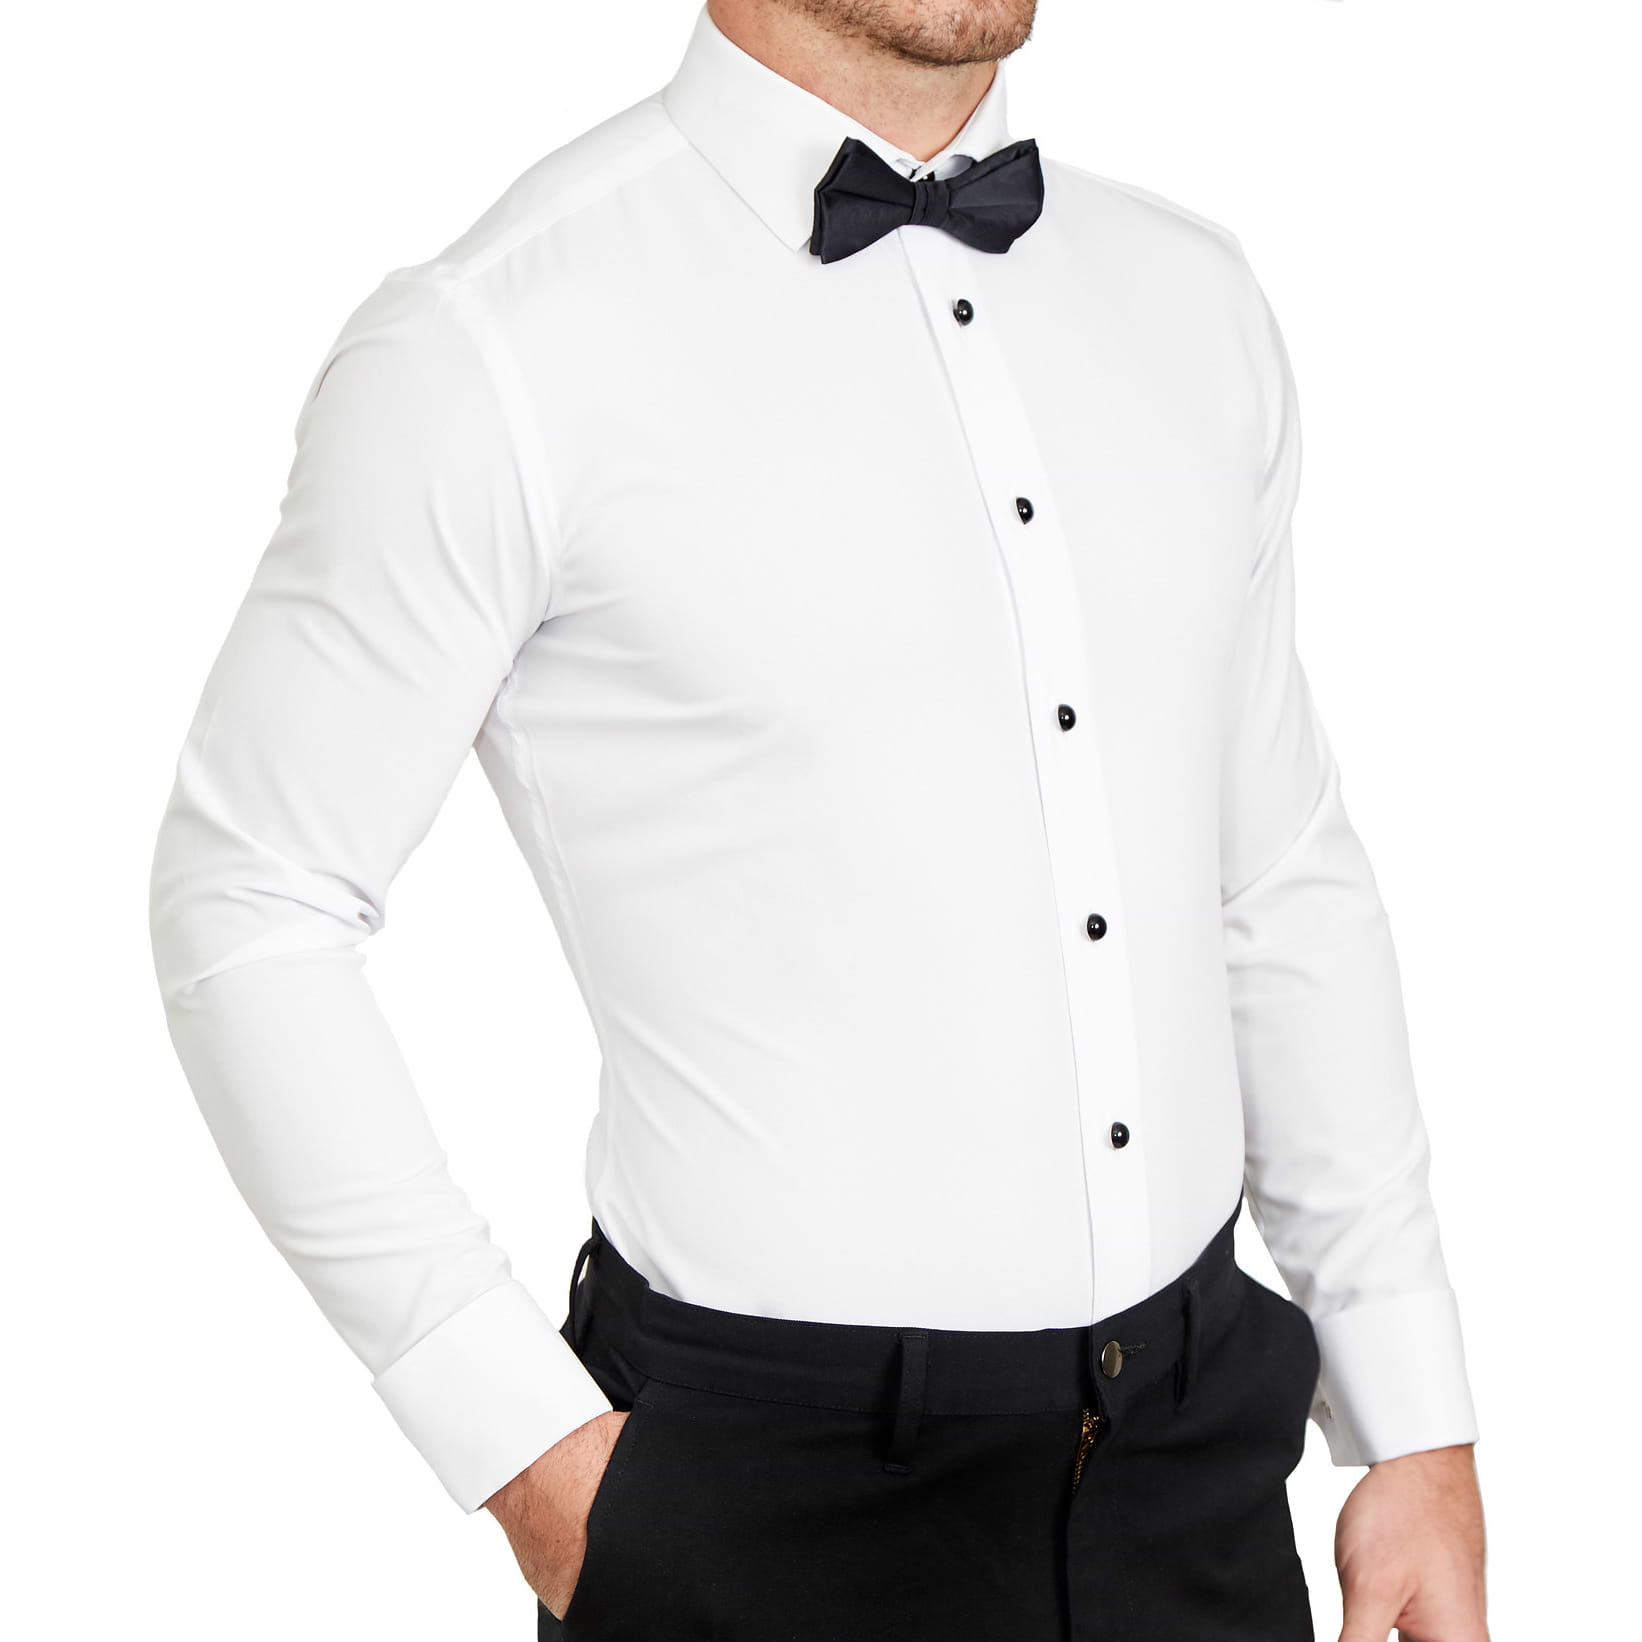 Mens Cufflinks and Studs Tuxedo Shirts Business Wedding Gift Set